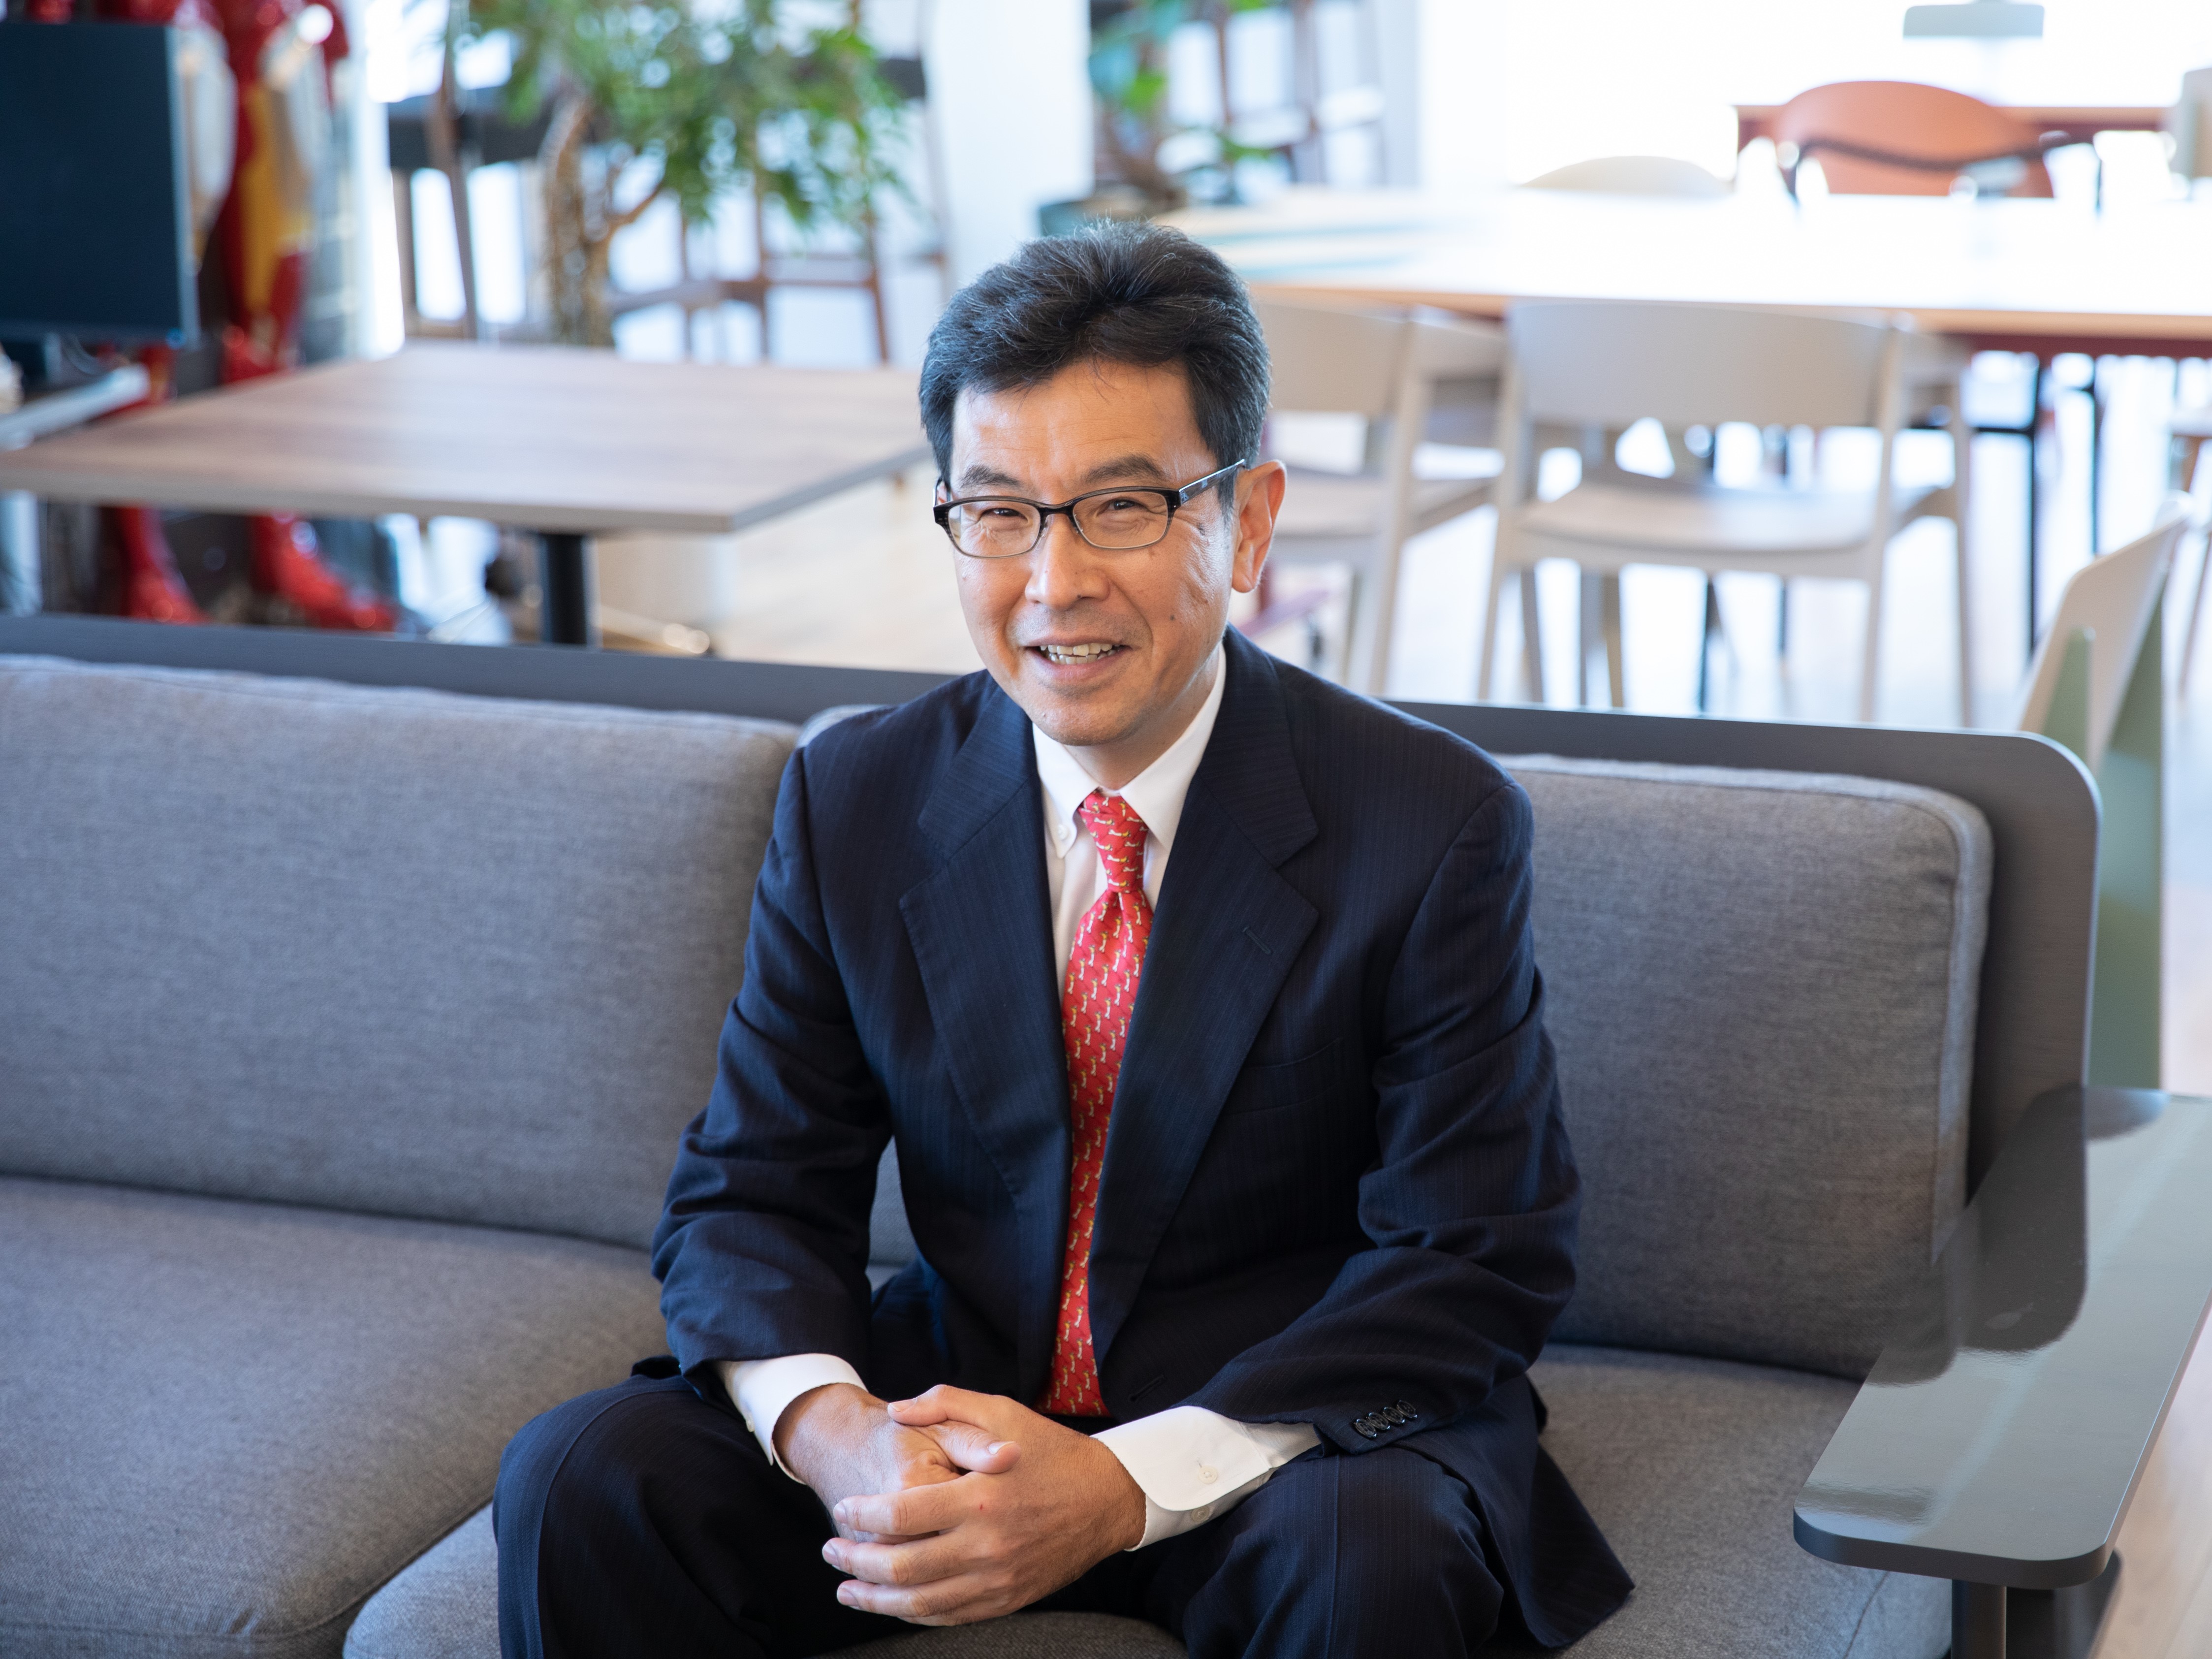 GxP 代表取締役社長 河西 健太郎氏
源流であるグロースエクスパートナーズ株式会社のホールディングス化に伴い、2018年11月に100%子会社として新たなスタートを切った。